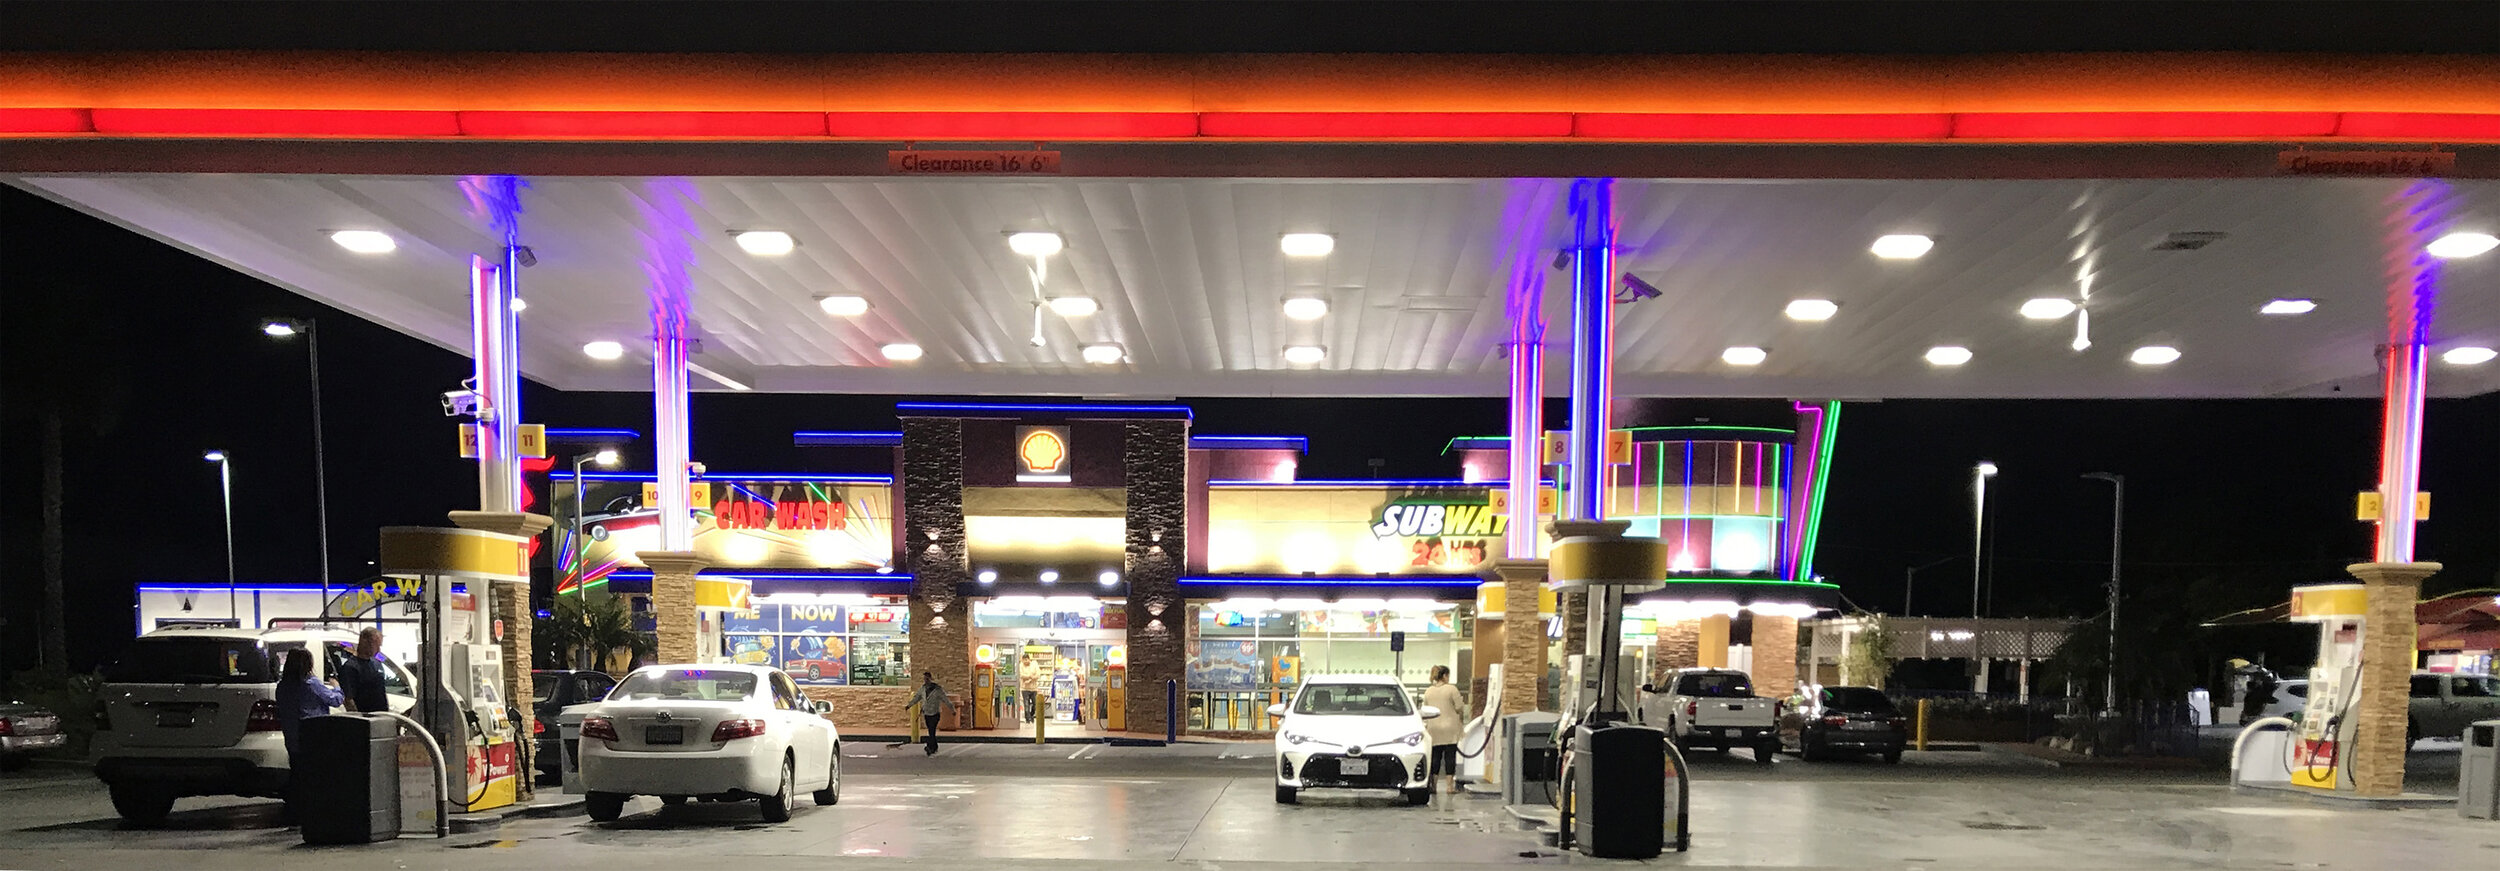 gas-station_01-3.jpg